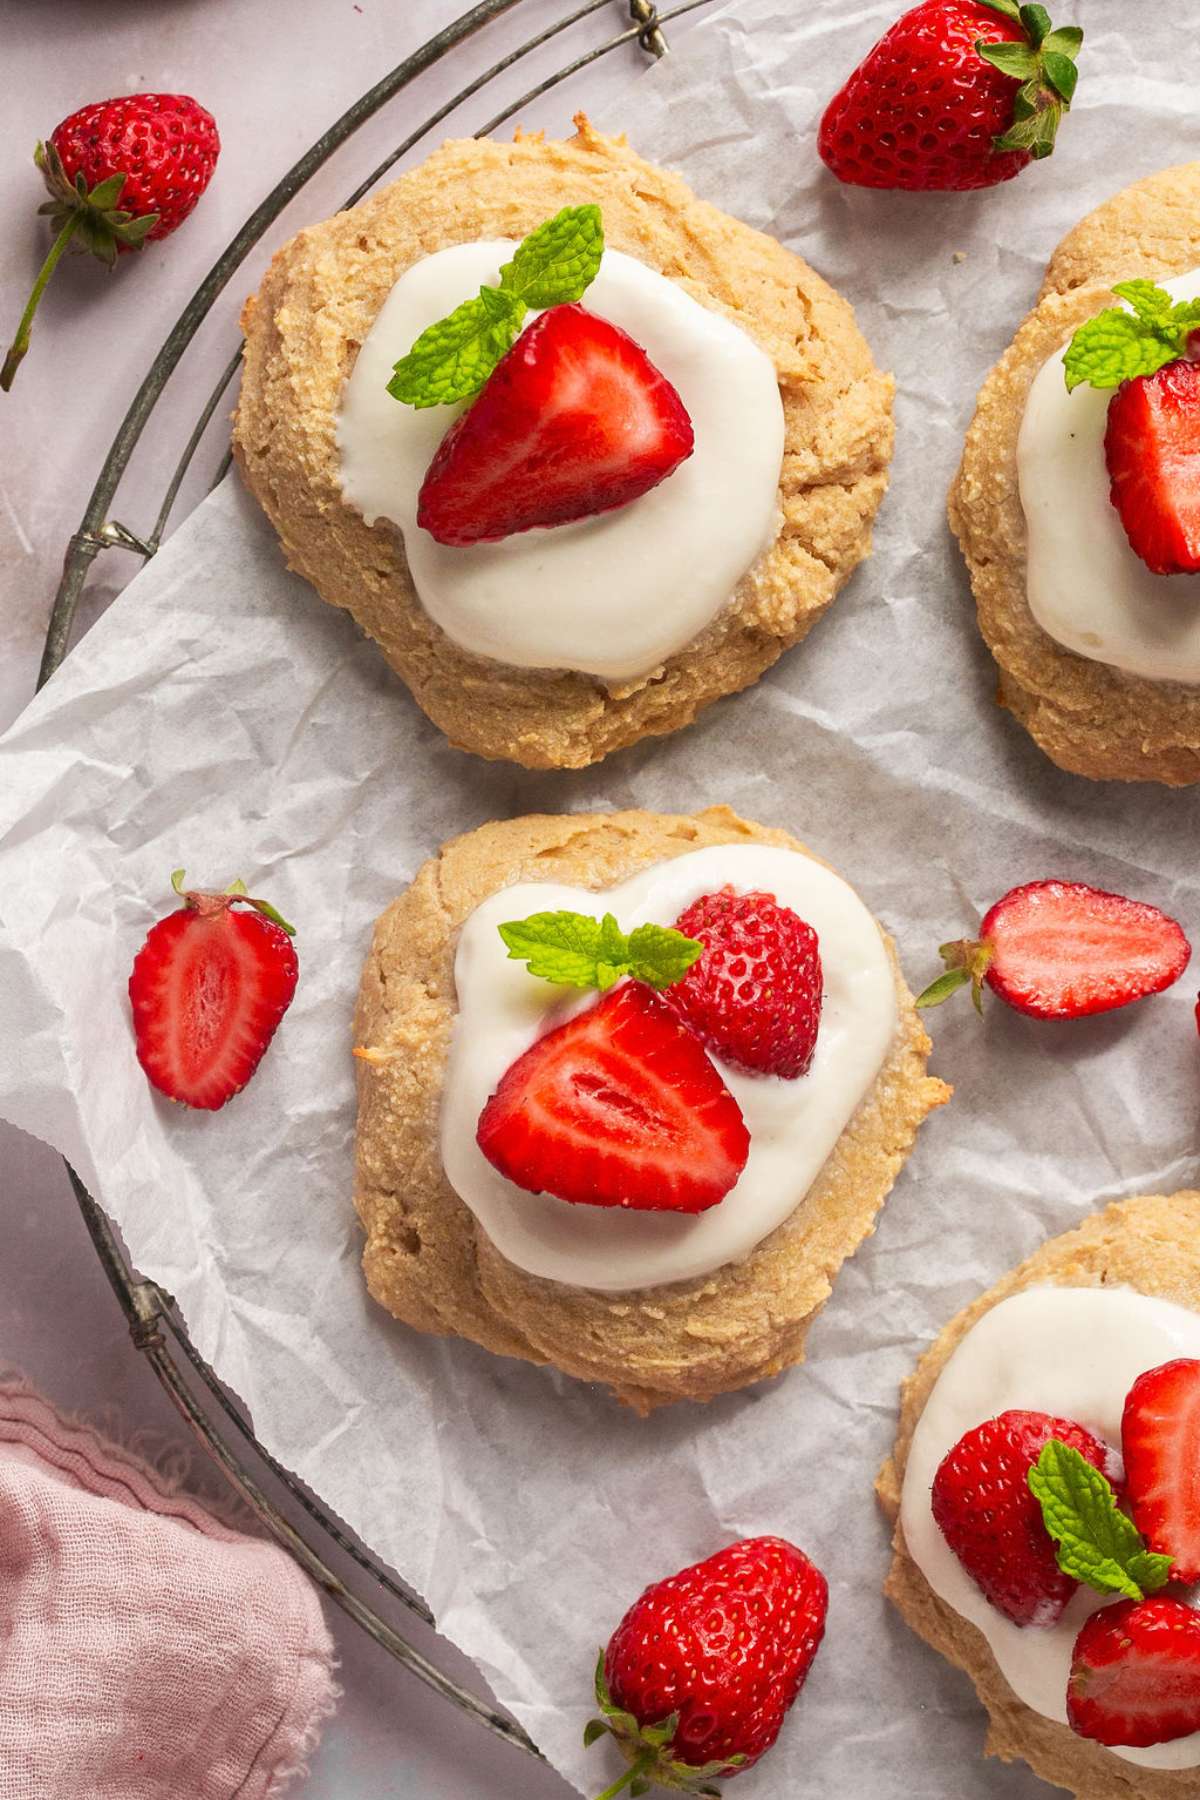 Sugar-free strawberry shortcake topped with creamy yogurt, fresh strawberries, and sprigs of mint.